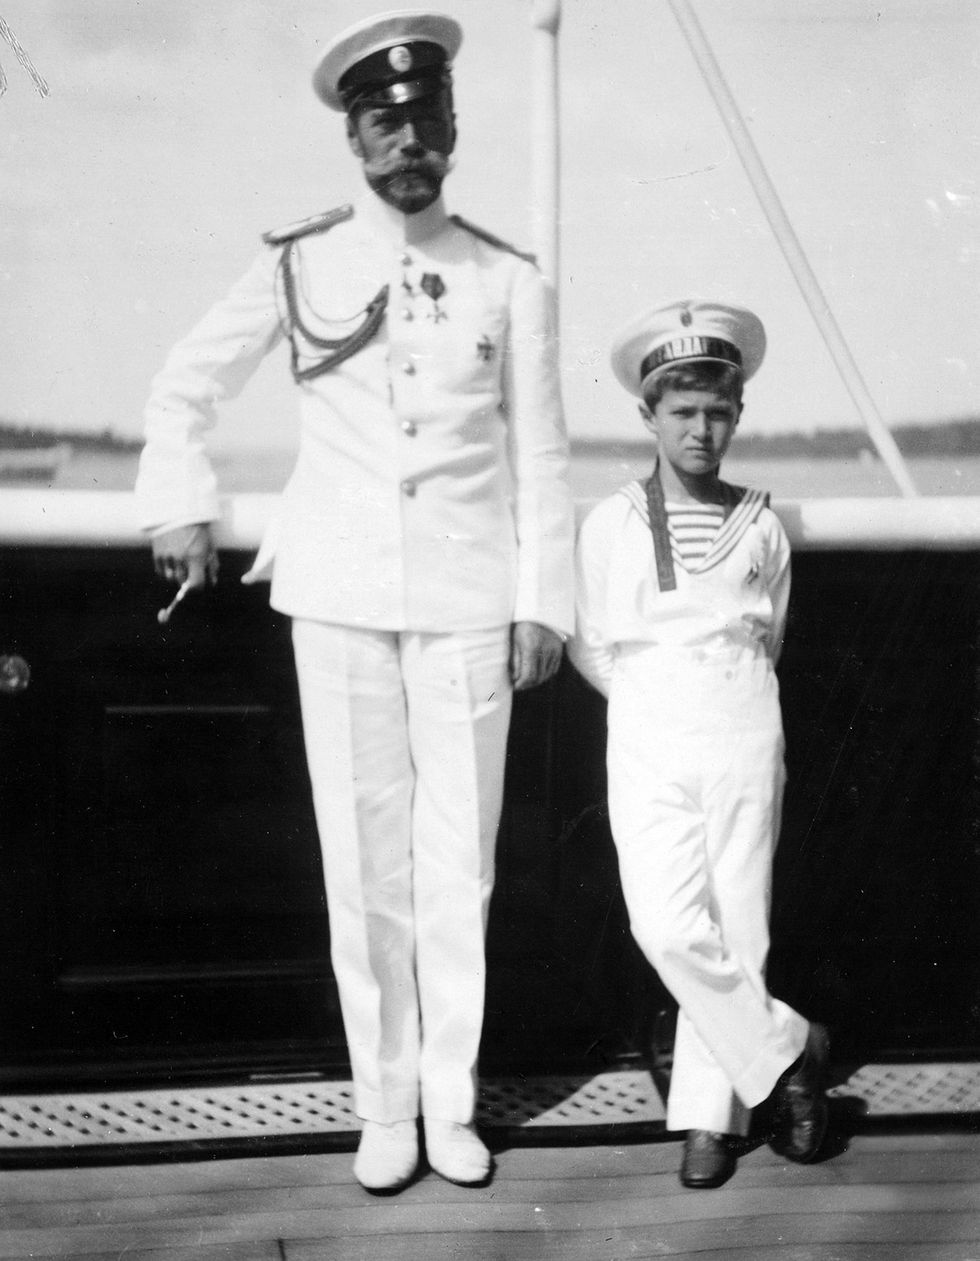 tsar nicholas ii of russia with his son, alexei the tsarevich